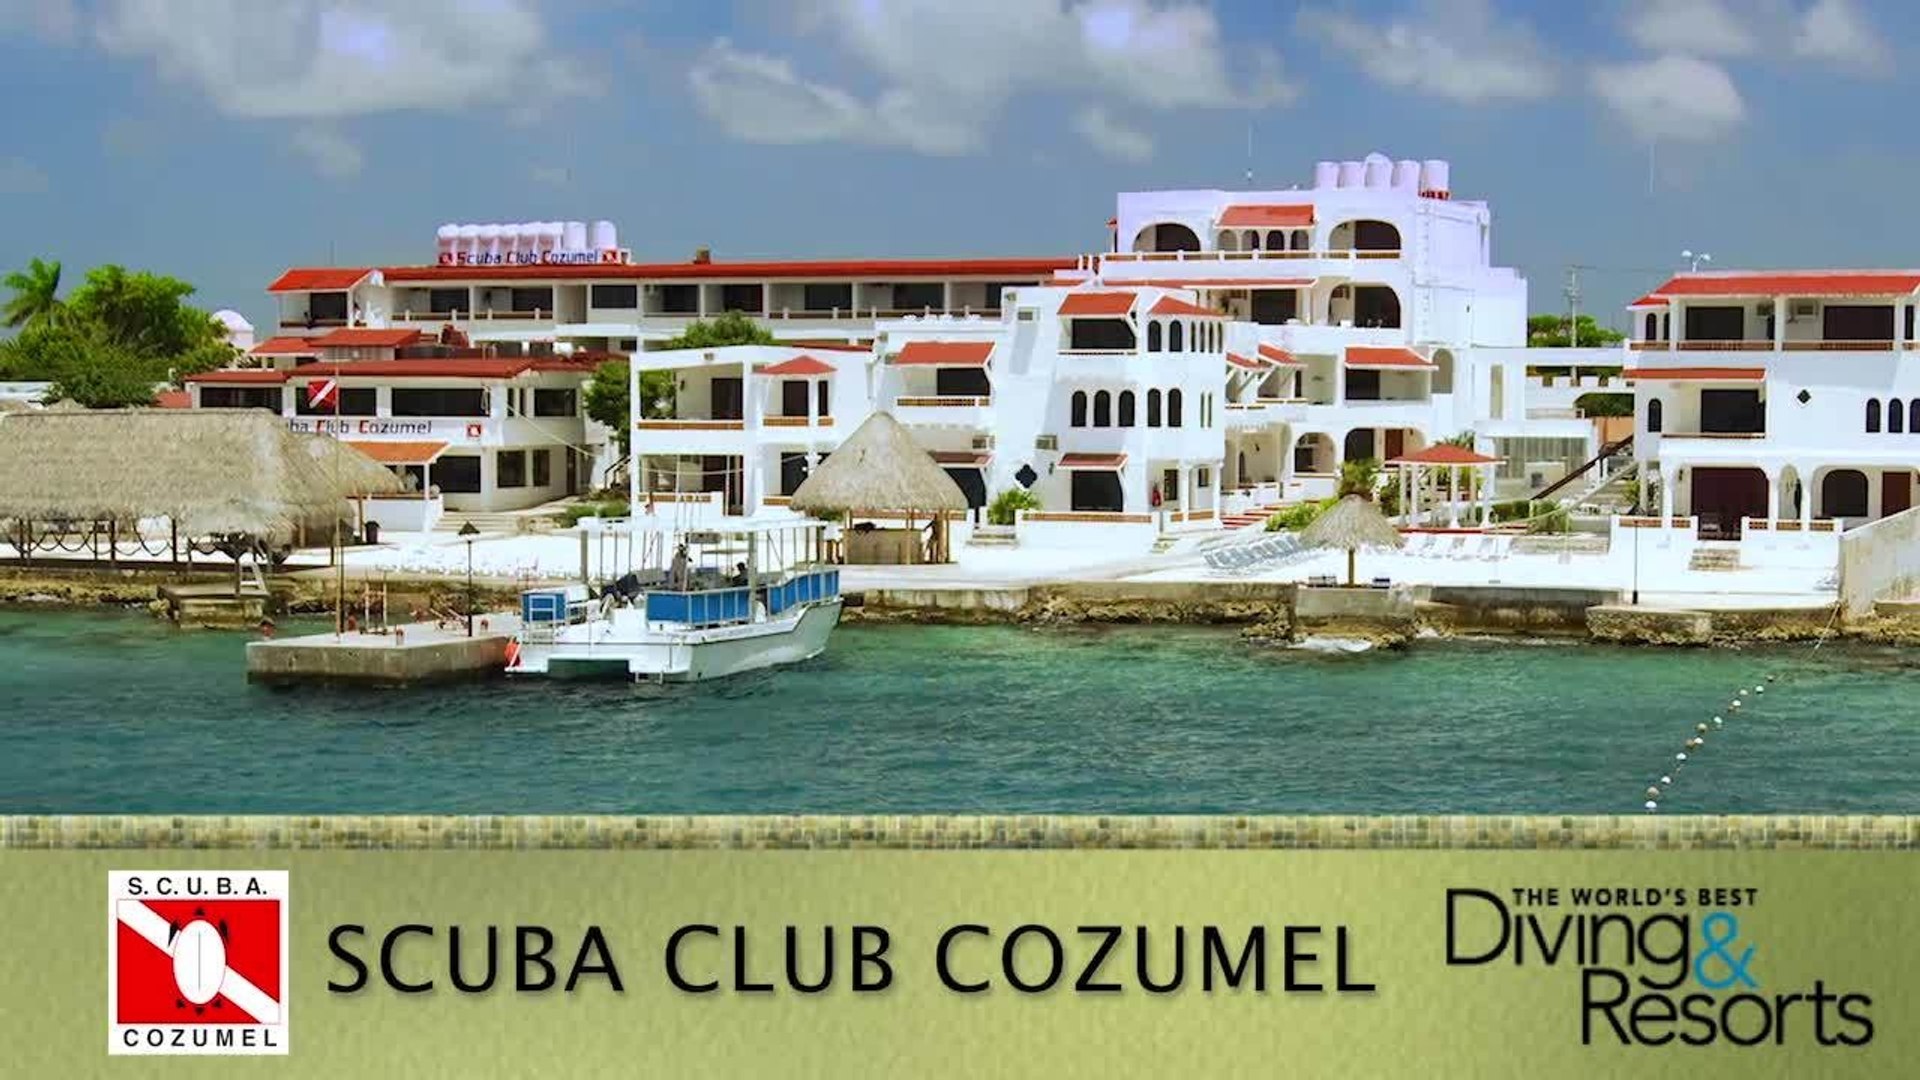 World's Best Diving & Resorts: Scuba Club Cozumel - video Dailymotion